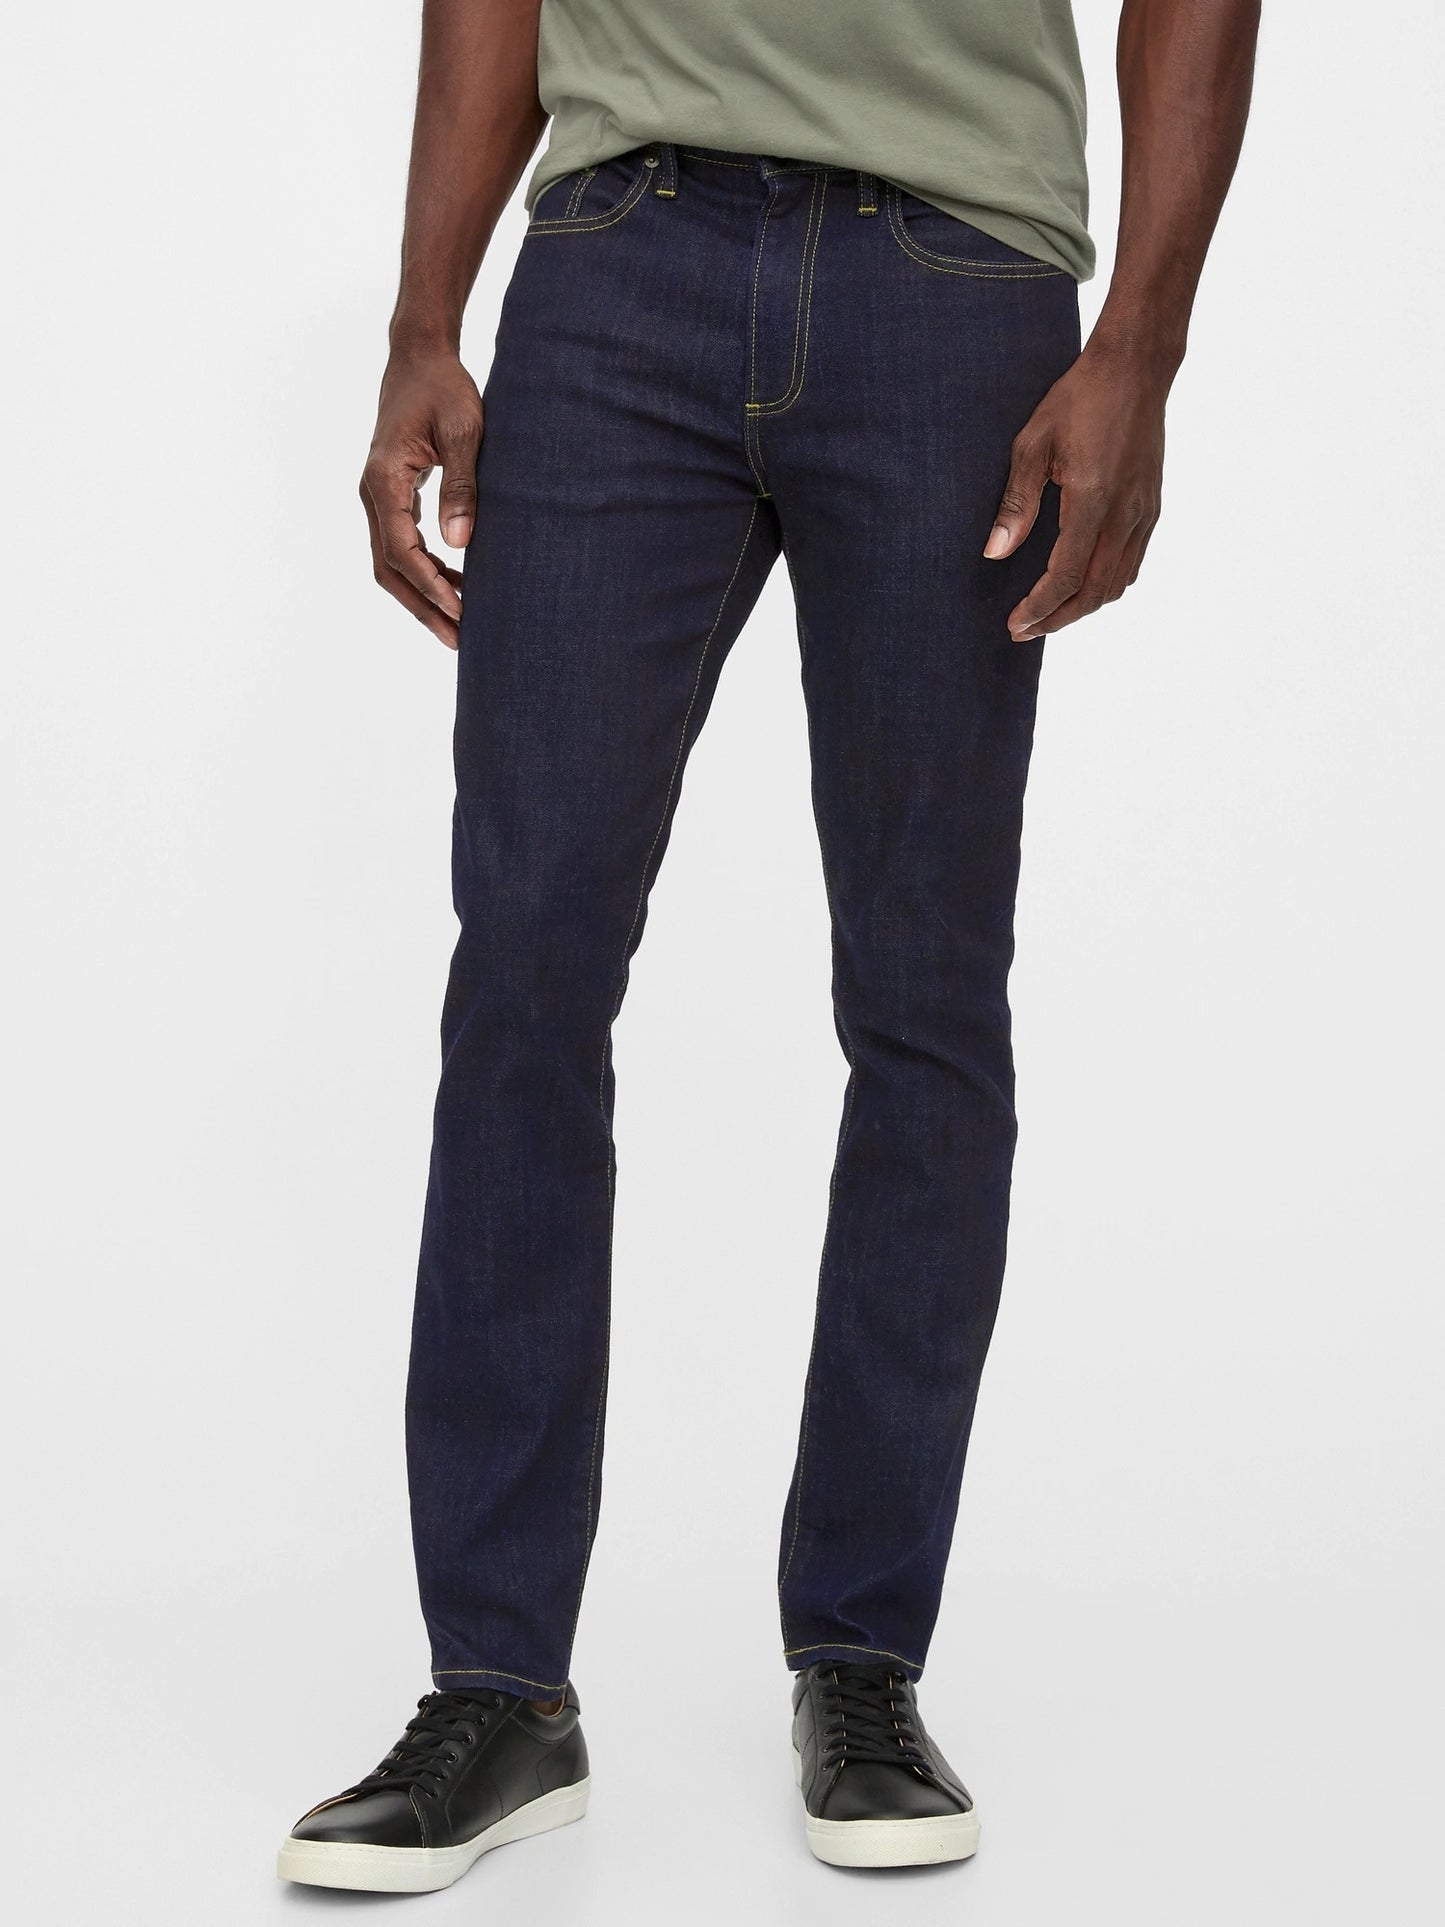 Gap Soft Wear Skinny Jeans With Gapflex - Resin Rinse